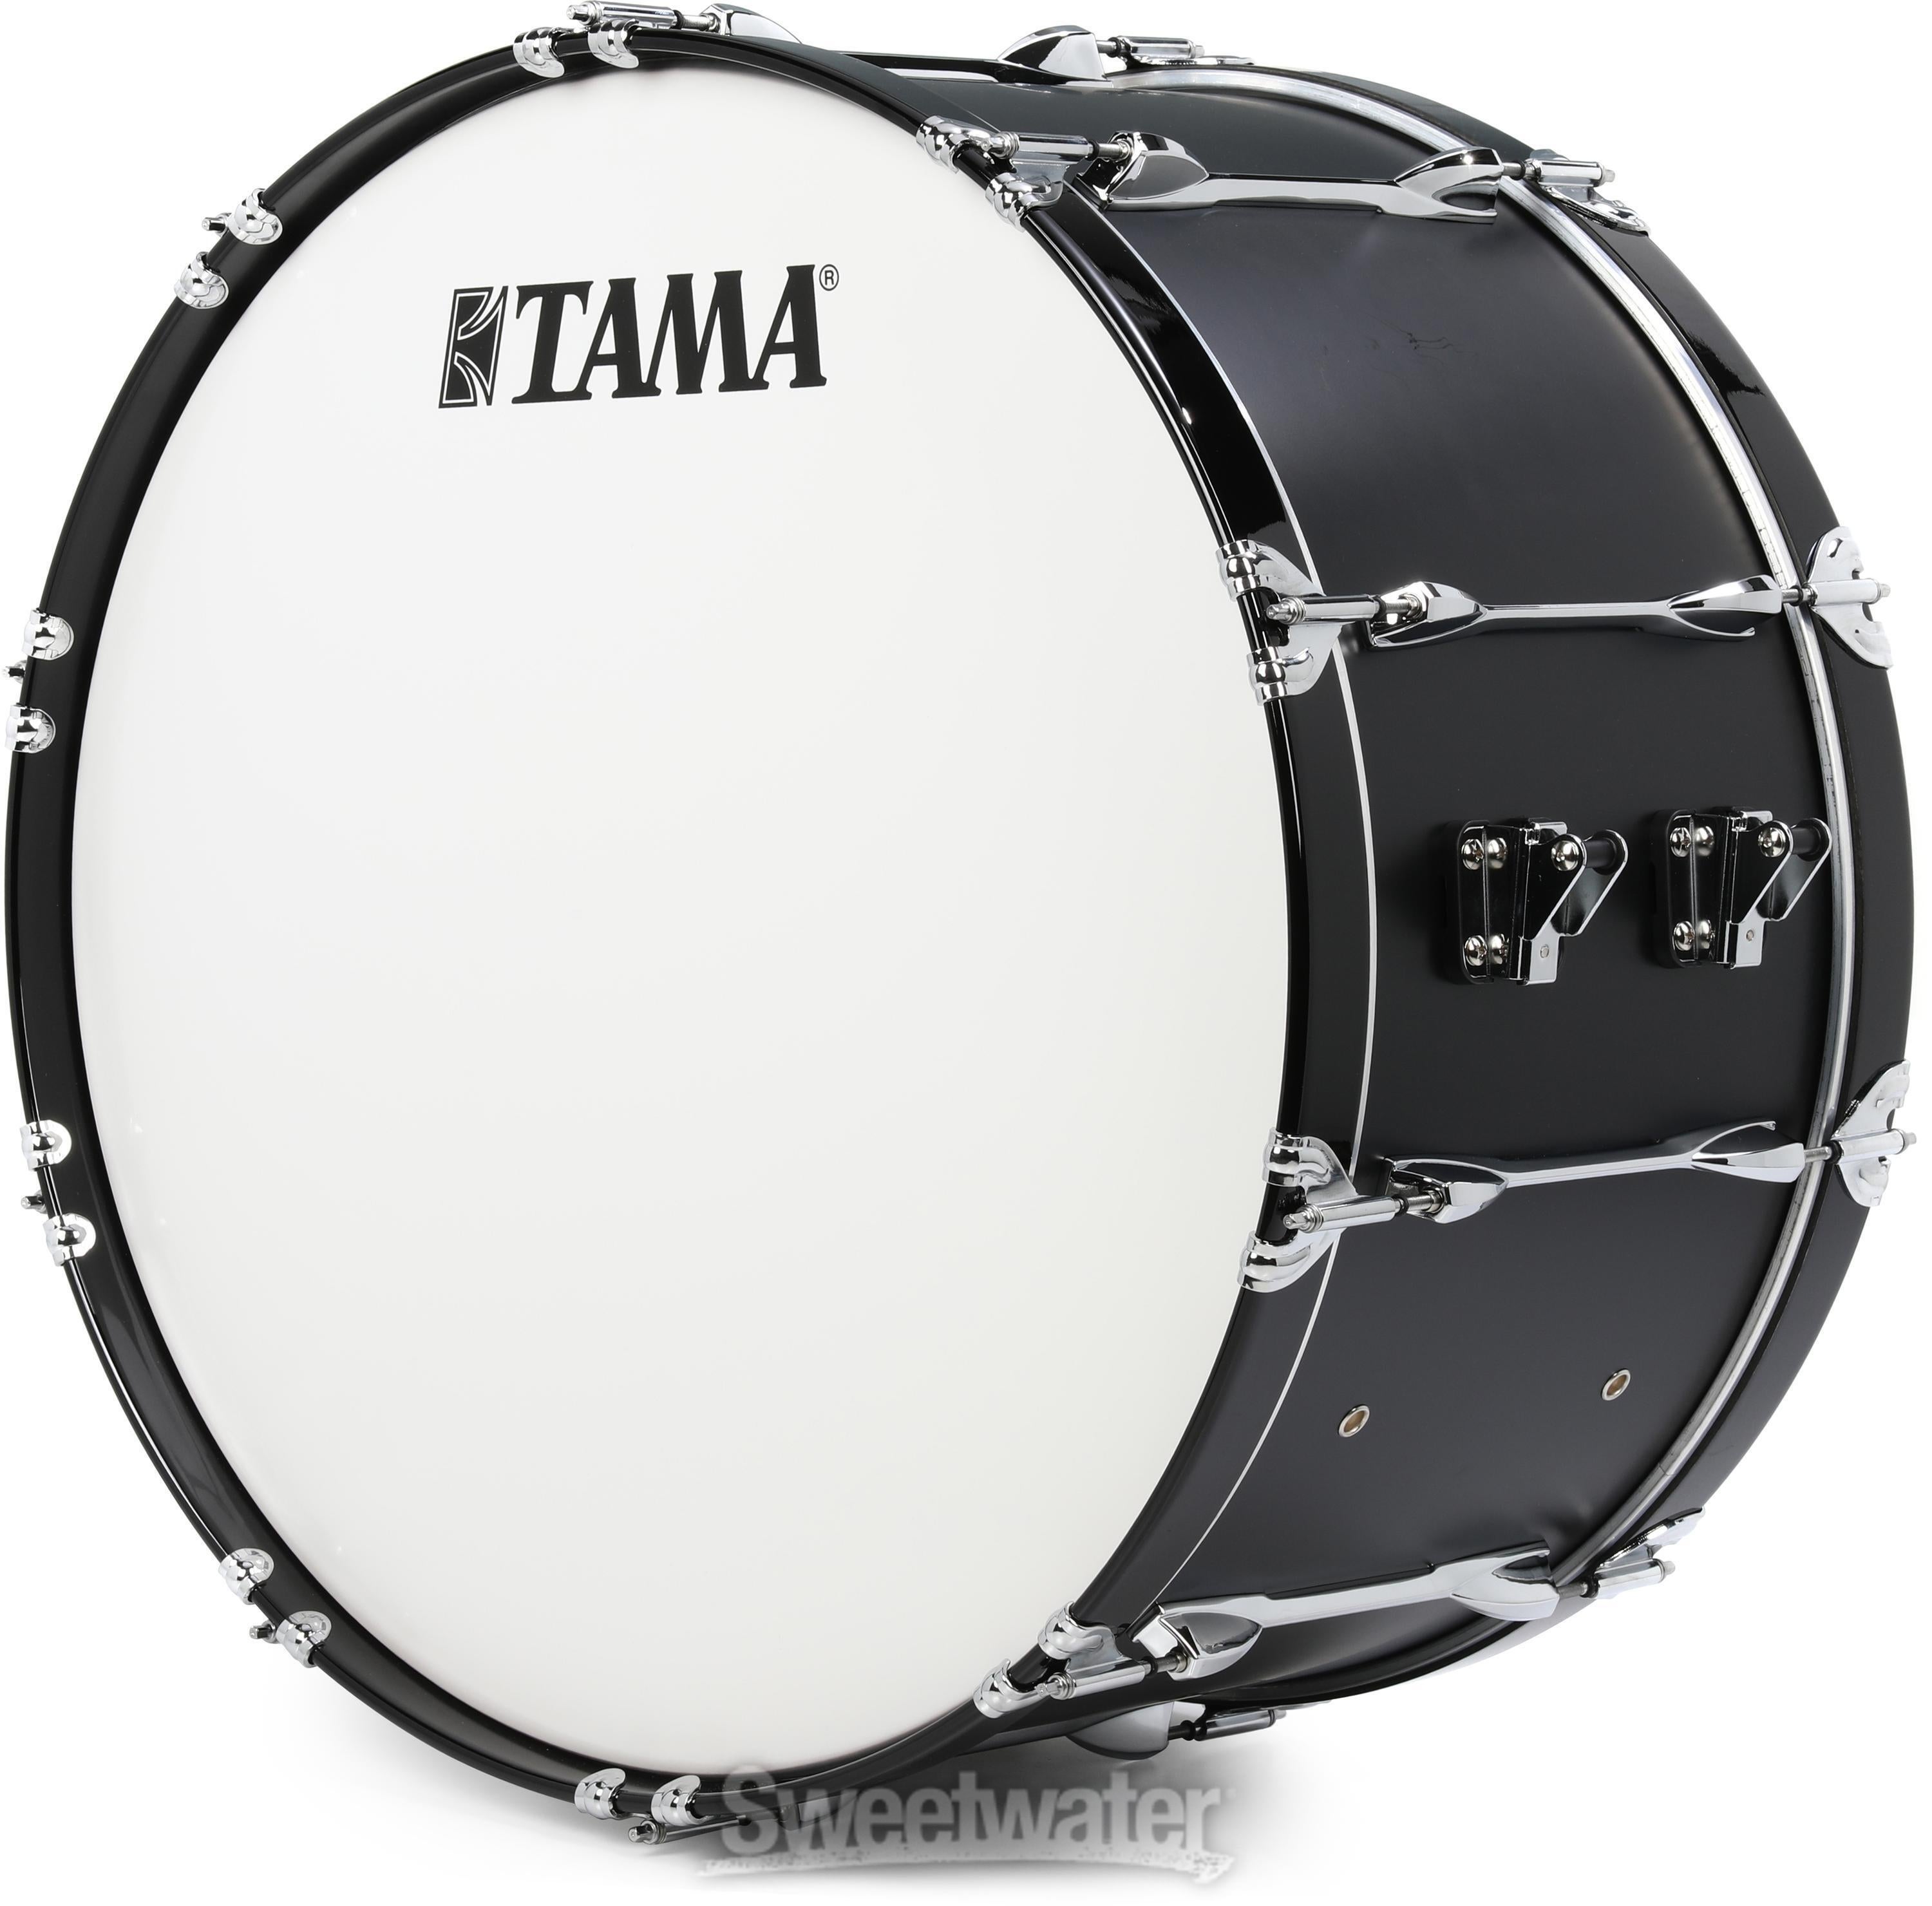 Tama Fieldstar Marching Bass Drum - 14 x 28 inch - Satin Black